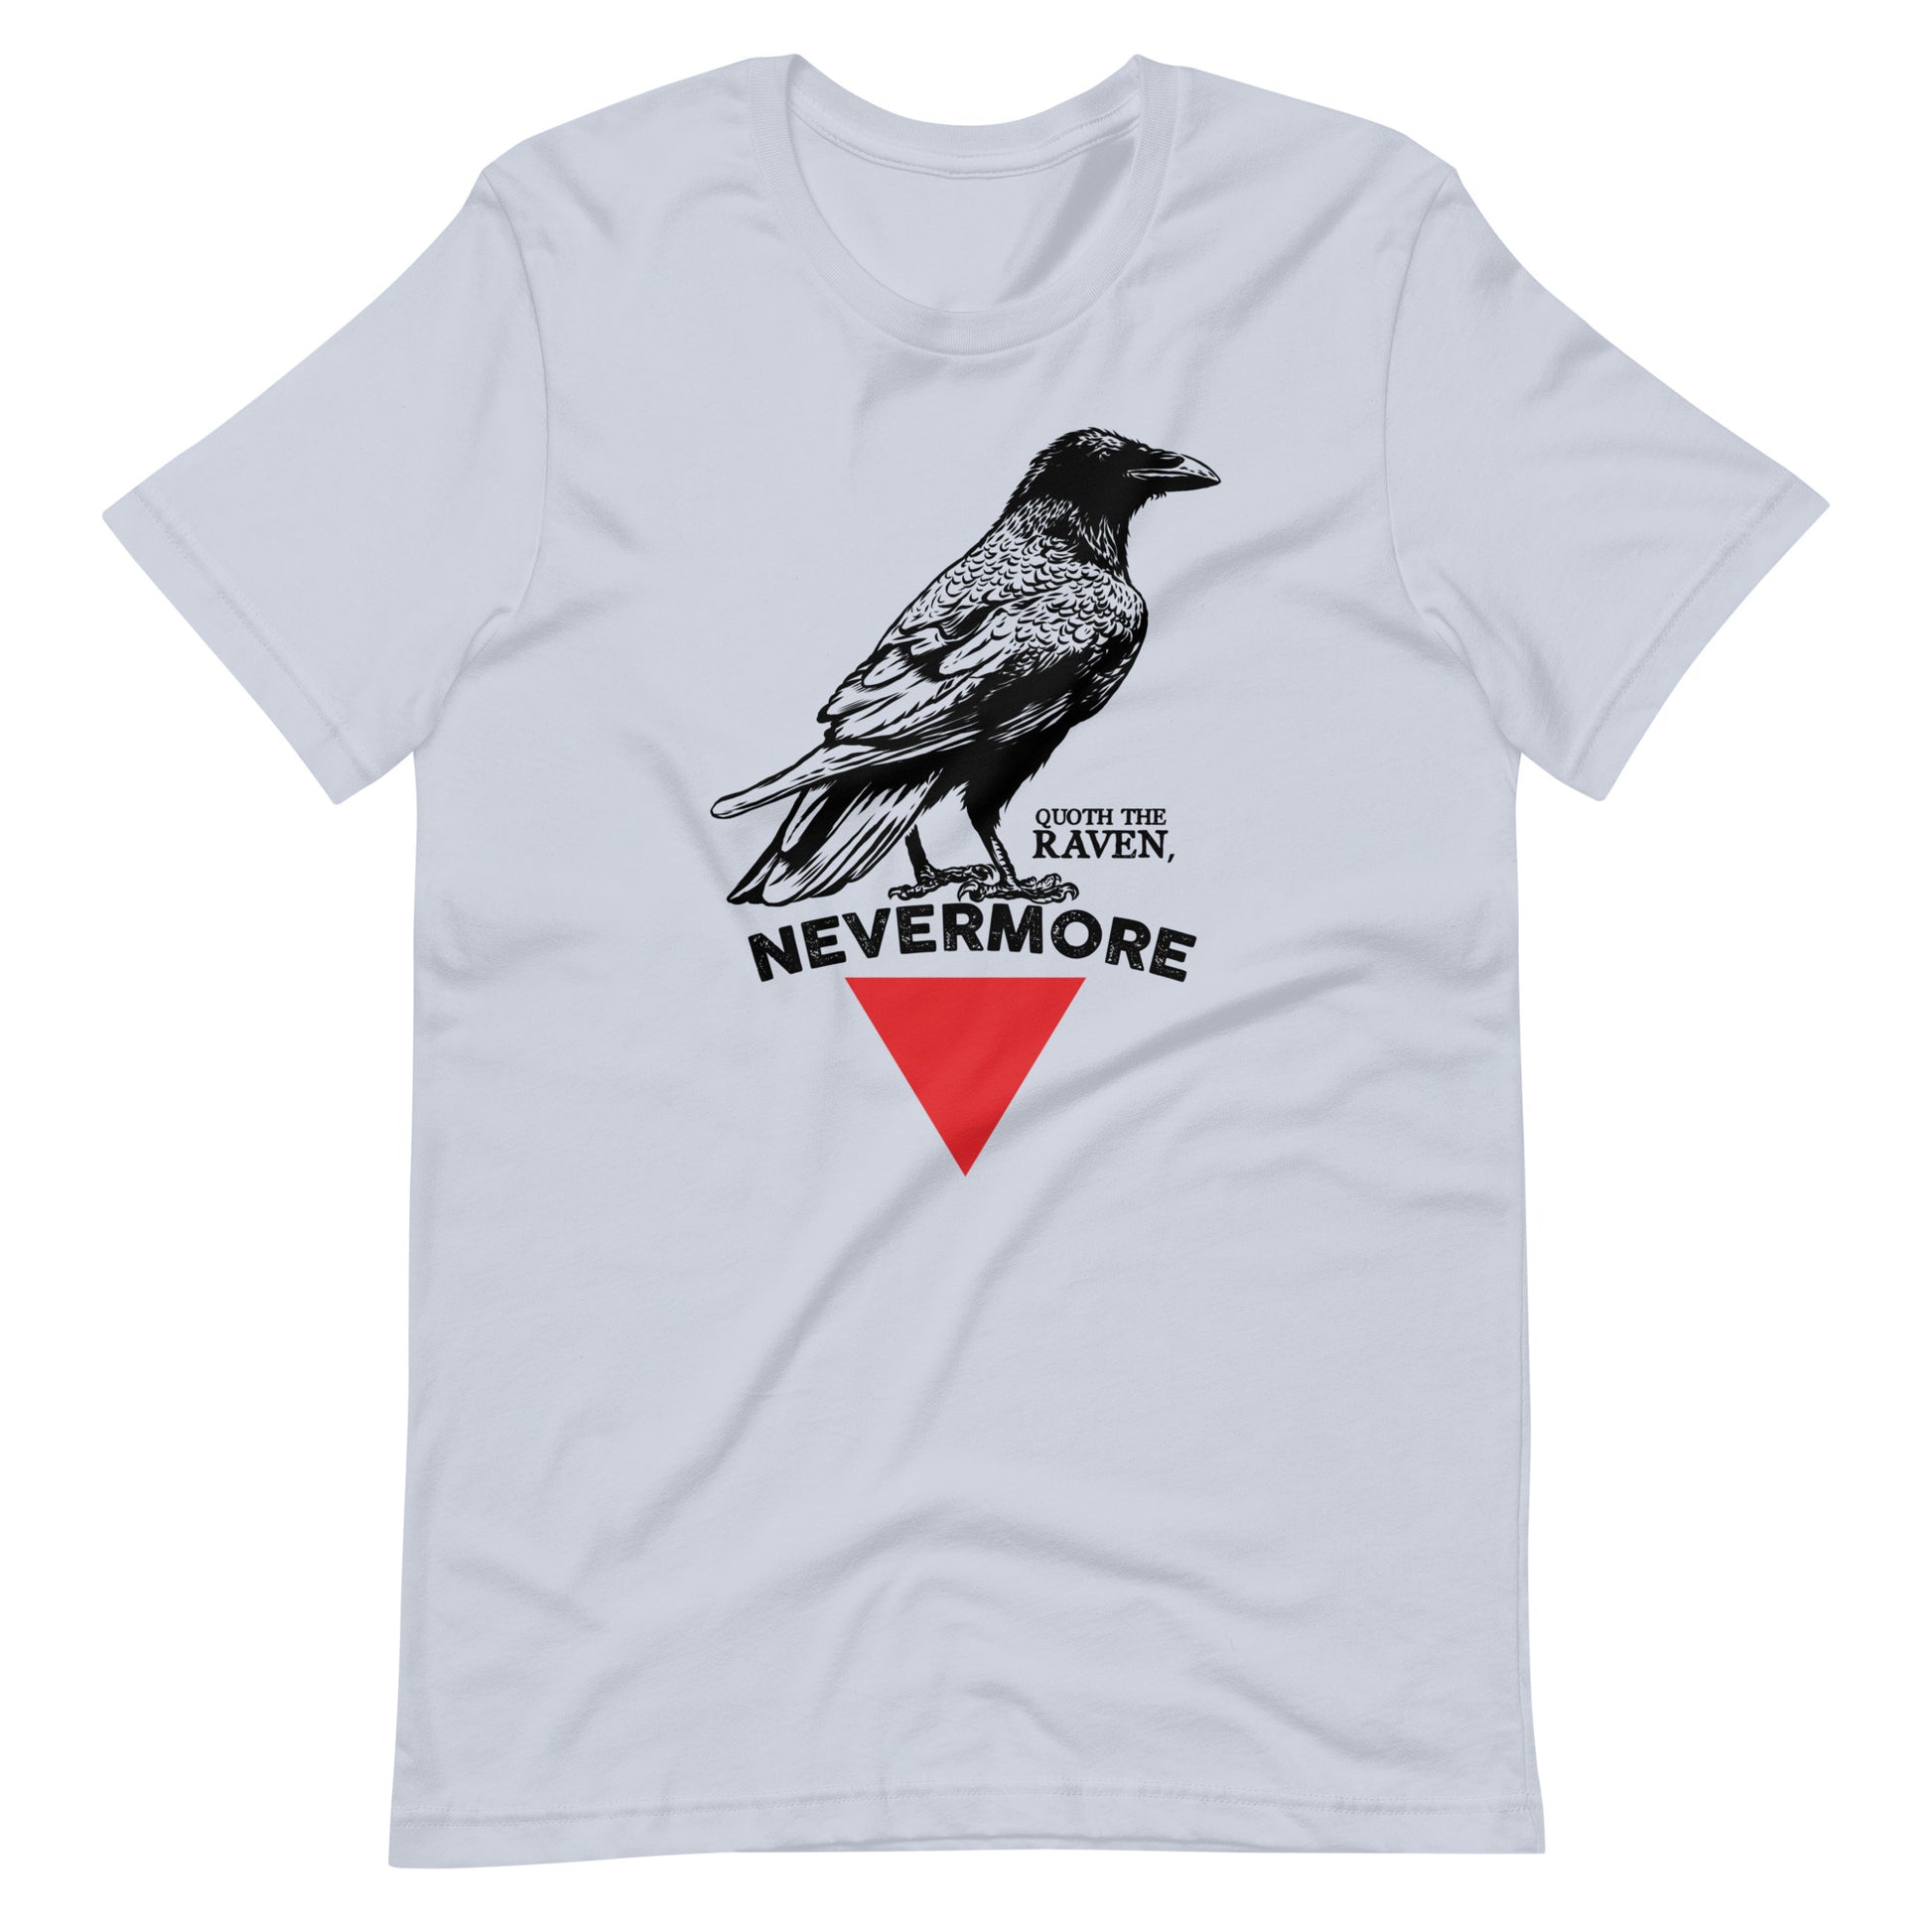 The Raven Nevermore Triangle - Men's t-shirt - Light Blue Front